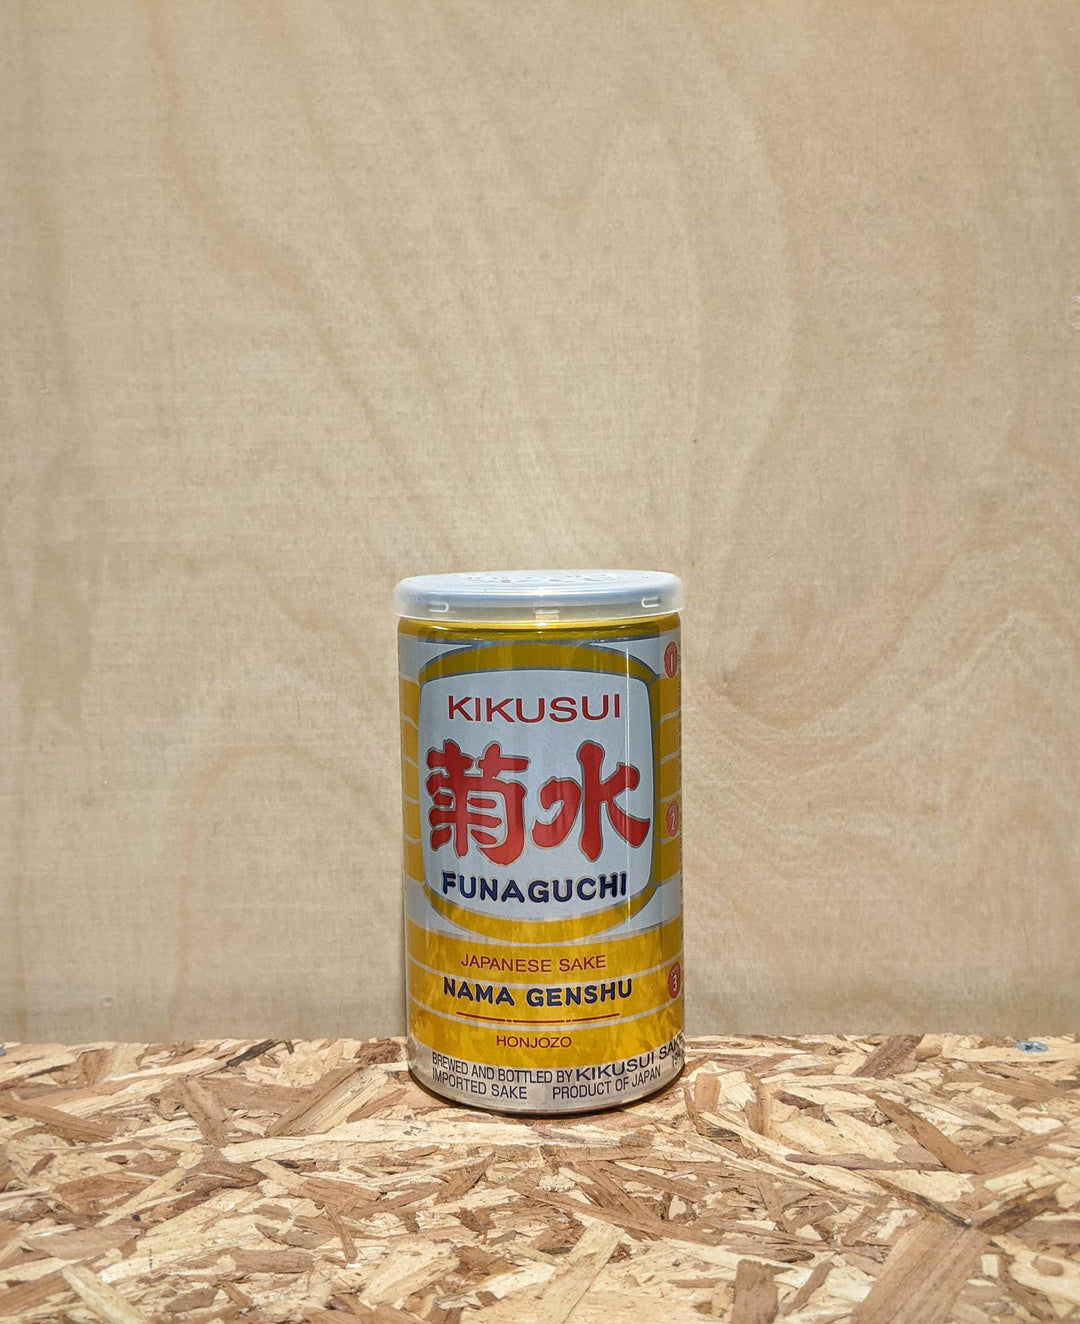 Kikusui Funaguchi Jukusei Nama Genshu Yellow Can (Niigata, Japan)